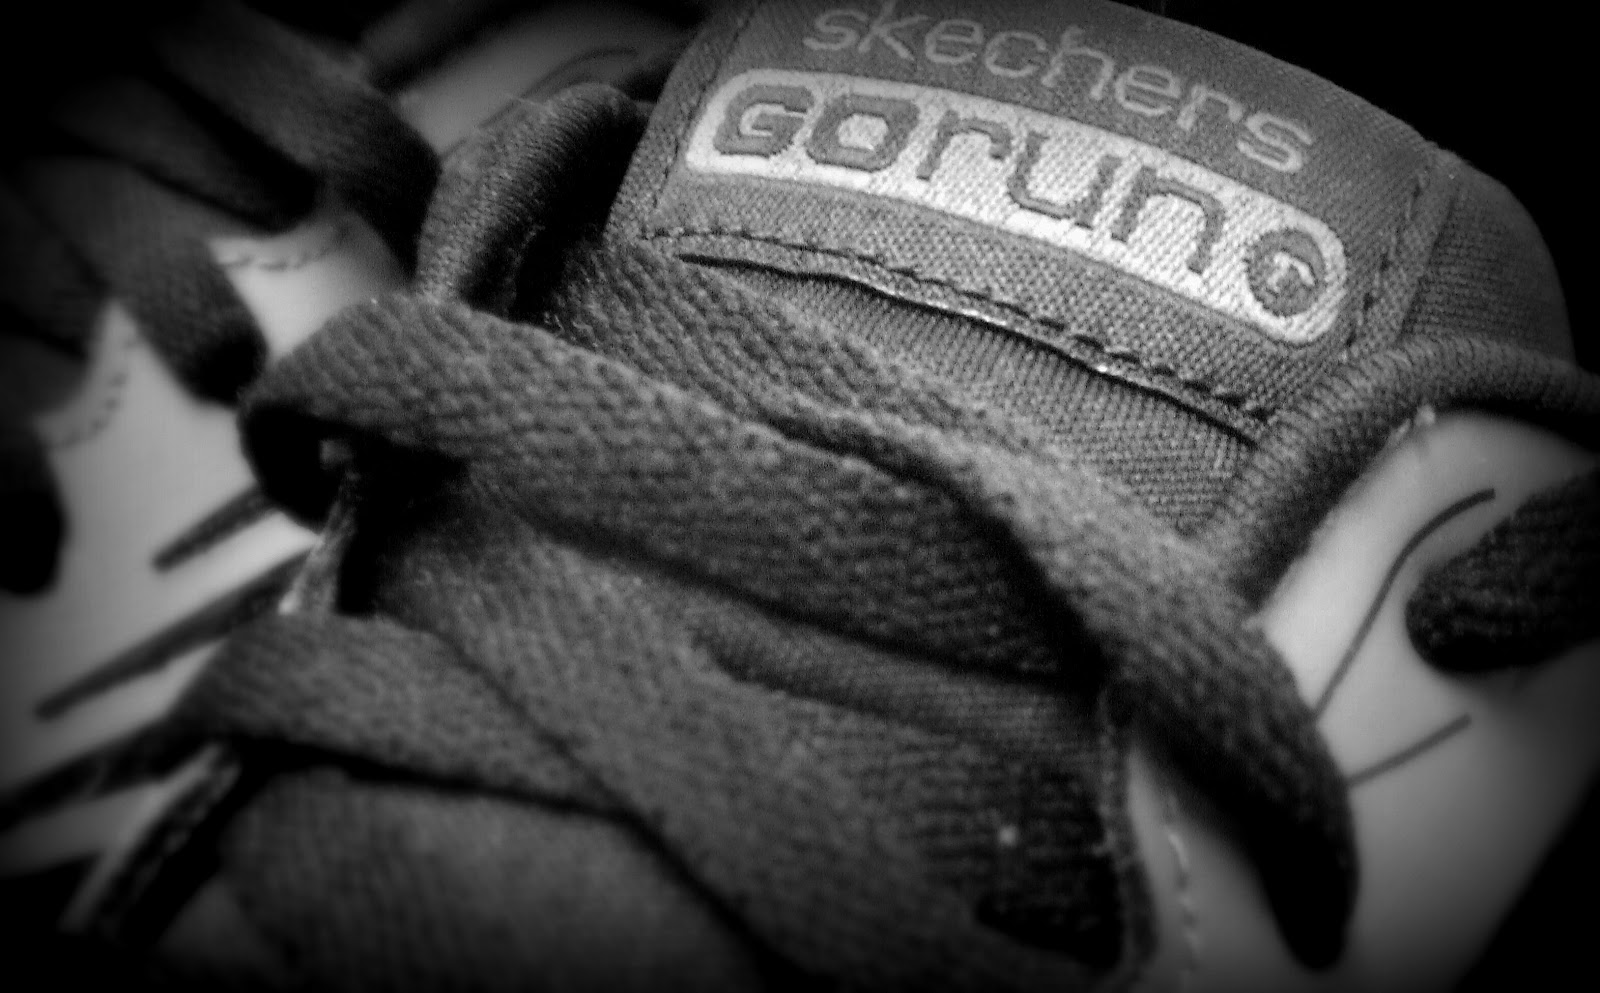 Contradict Tutor Mechanics Skechers GOrun Ride: The Review